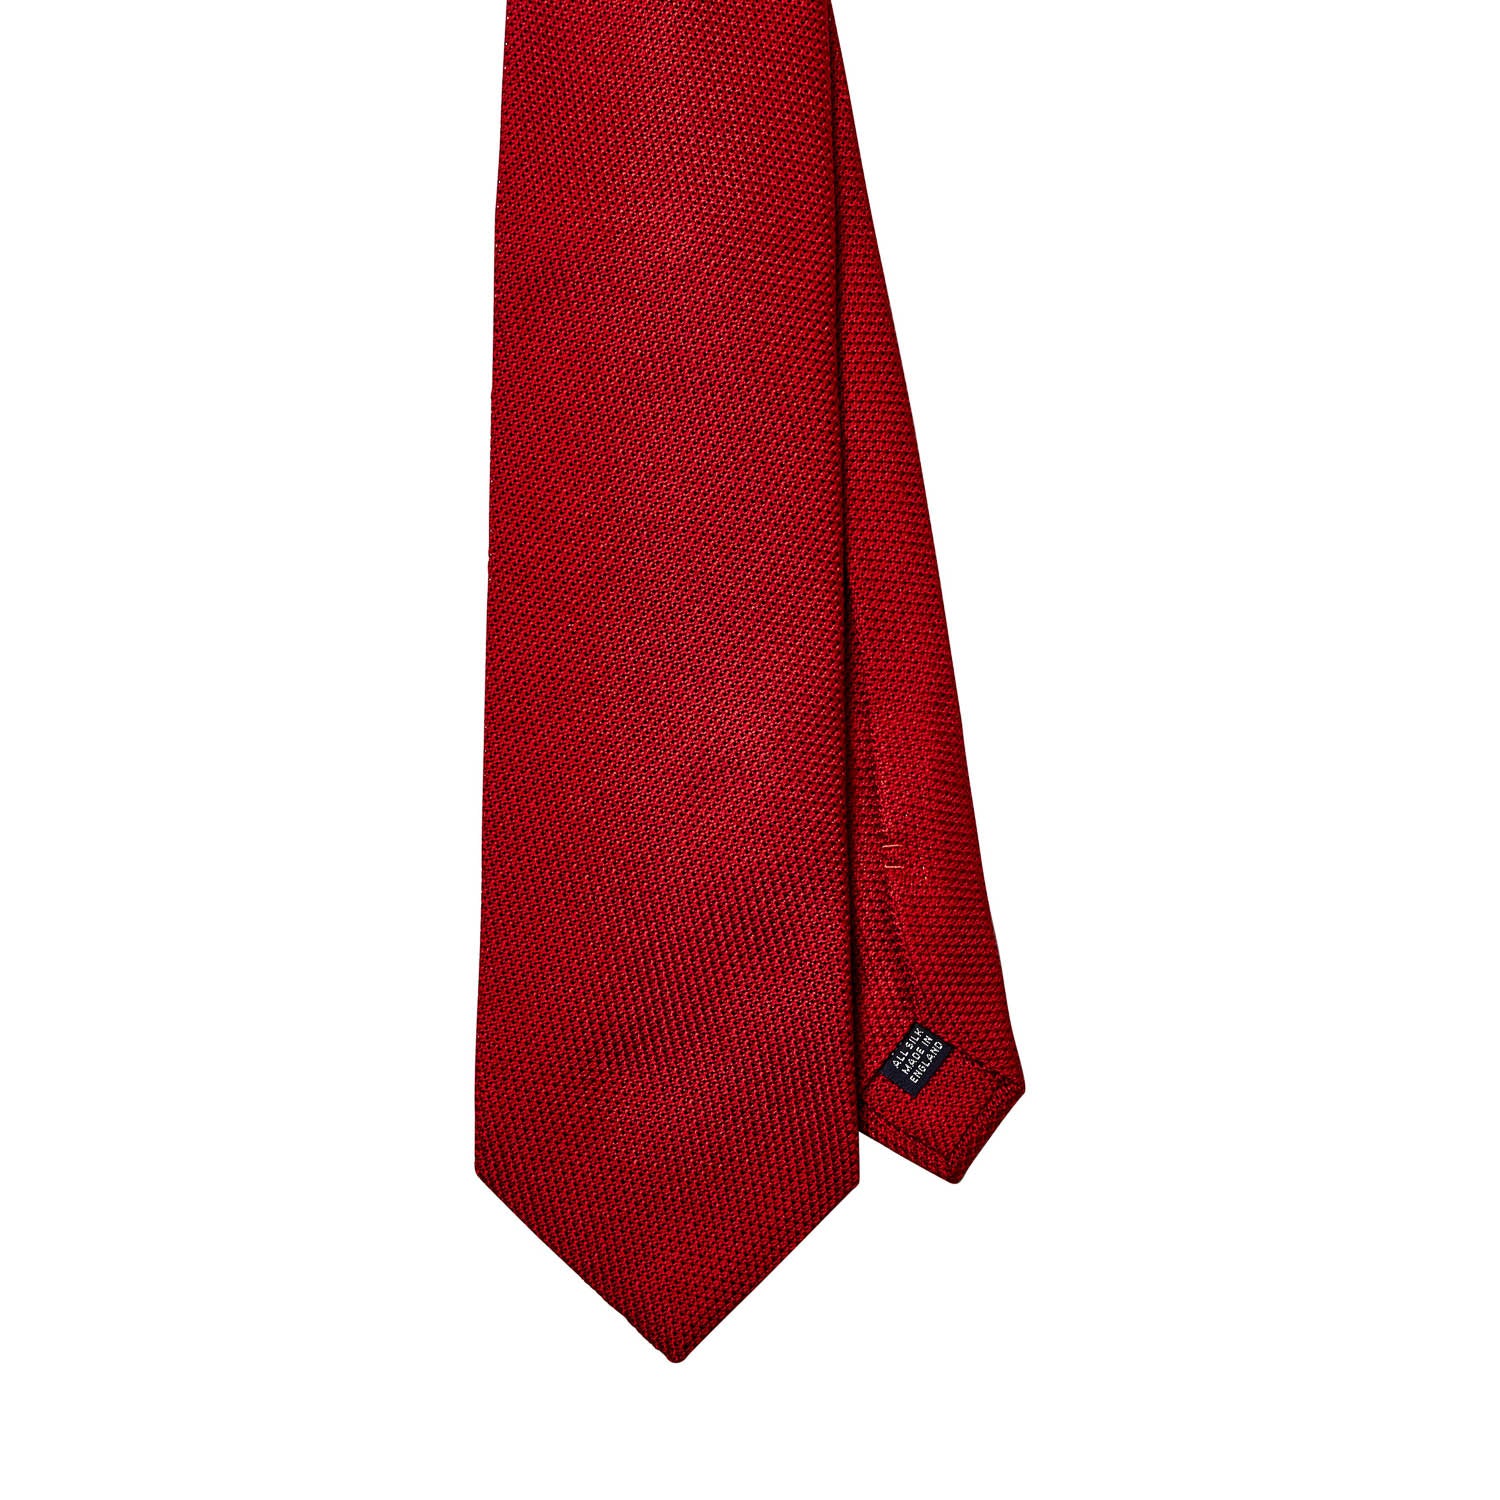 A Sovereign Grade Grenadine Fina Red Tie handmade by KirbyAllison.com.